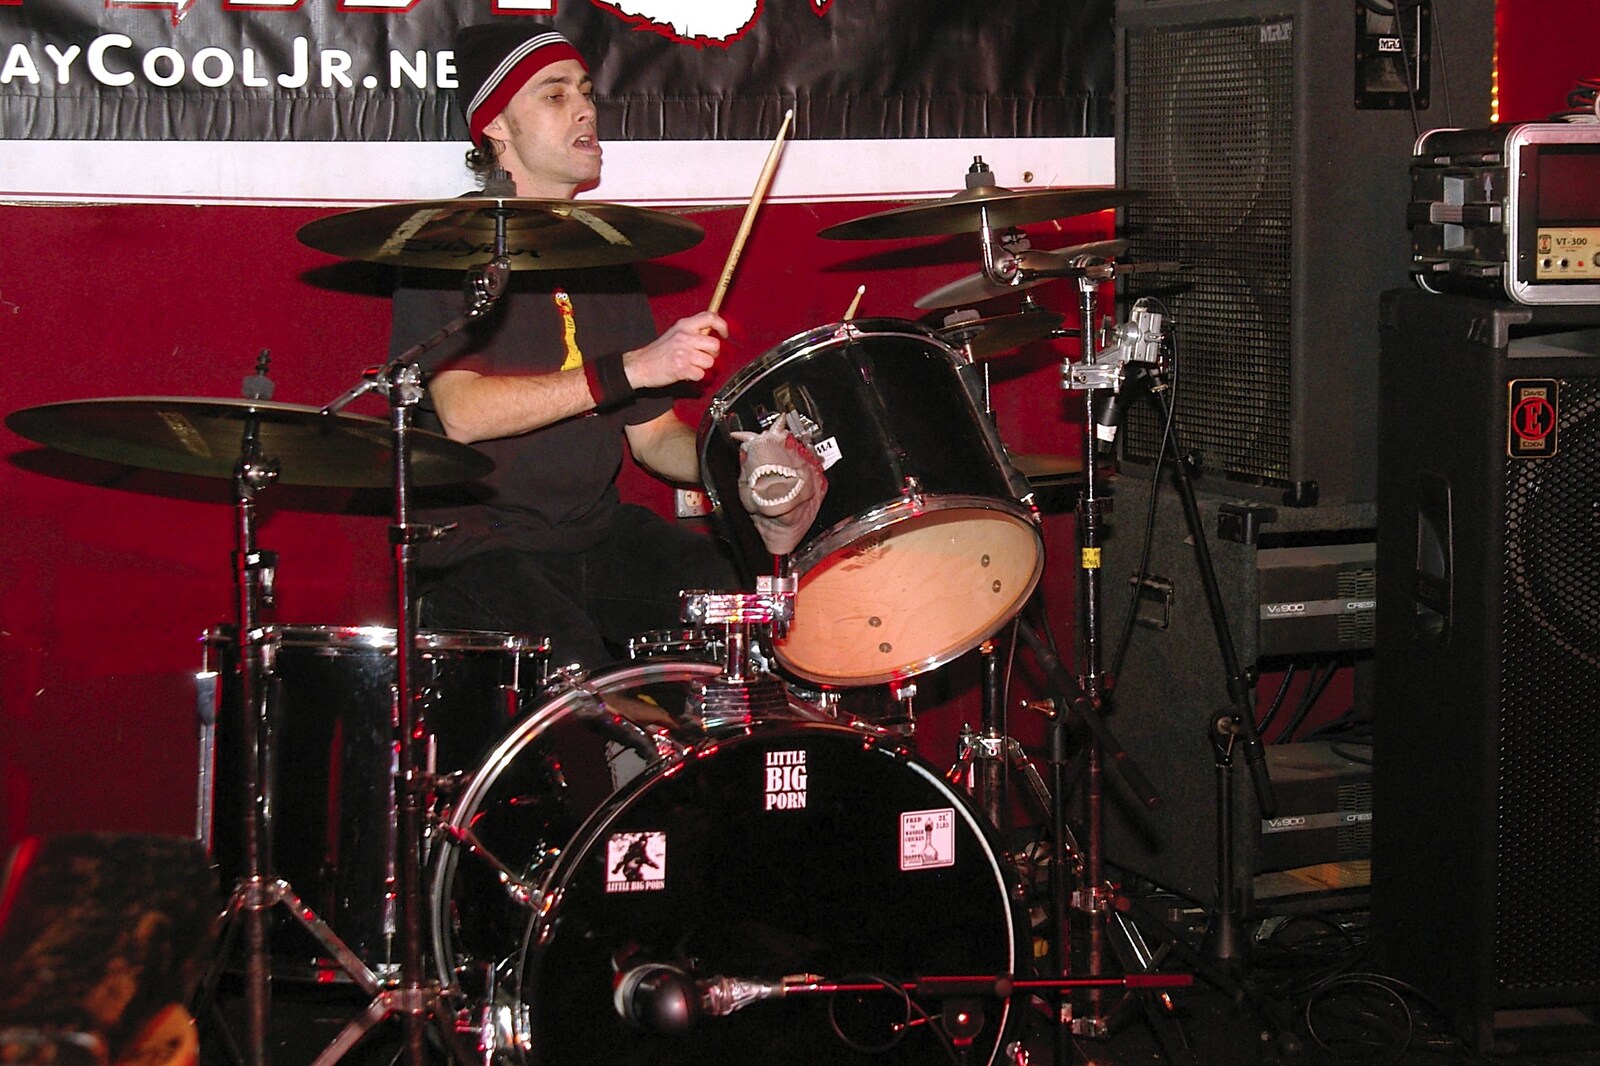 The drummer sound-checks from Cruisin' Route 101, San Diego to Capistrano, California - 4th March 2006